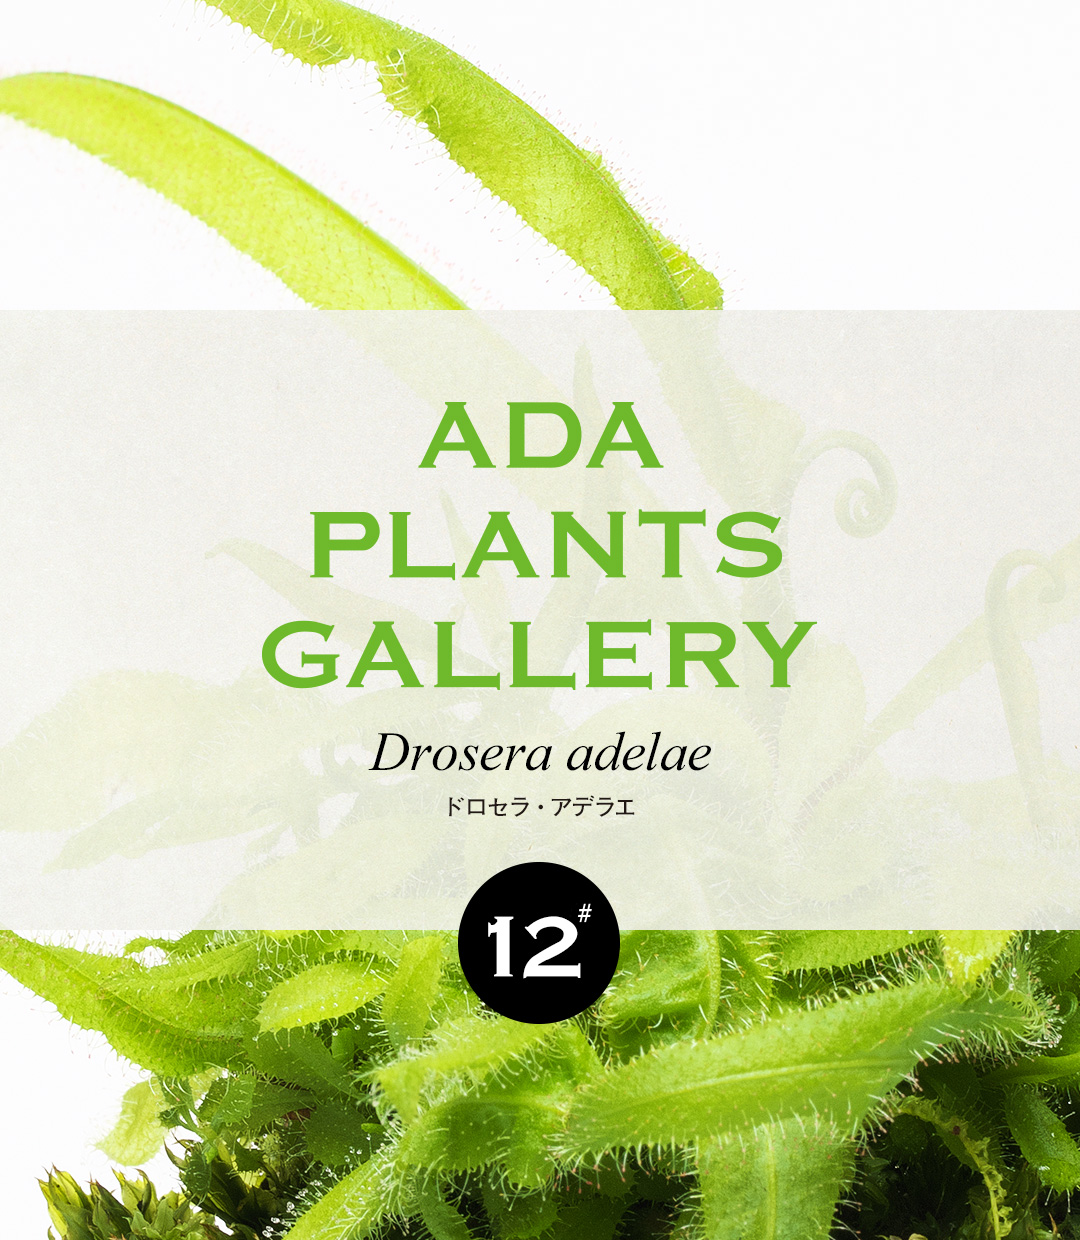 ADA PLANTS GALLERY #12 Drosera adelae